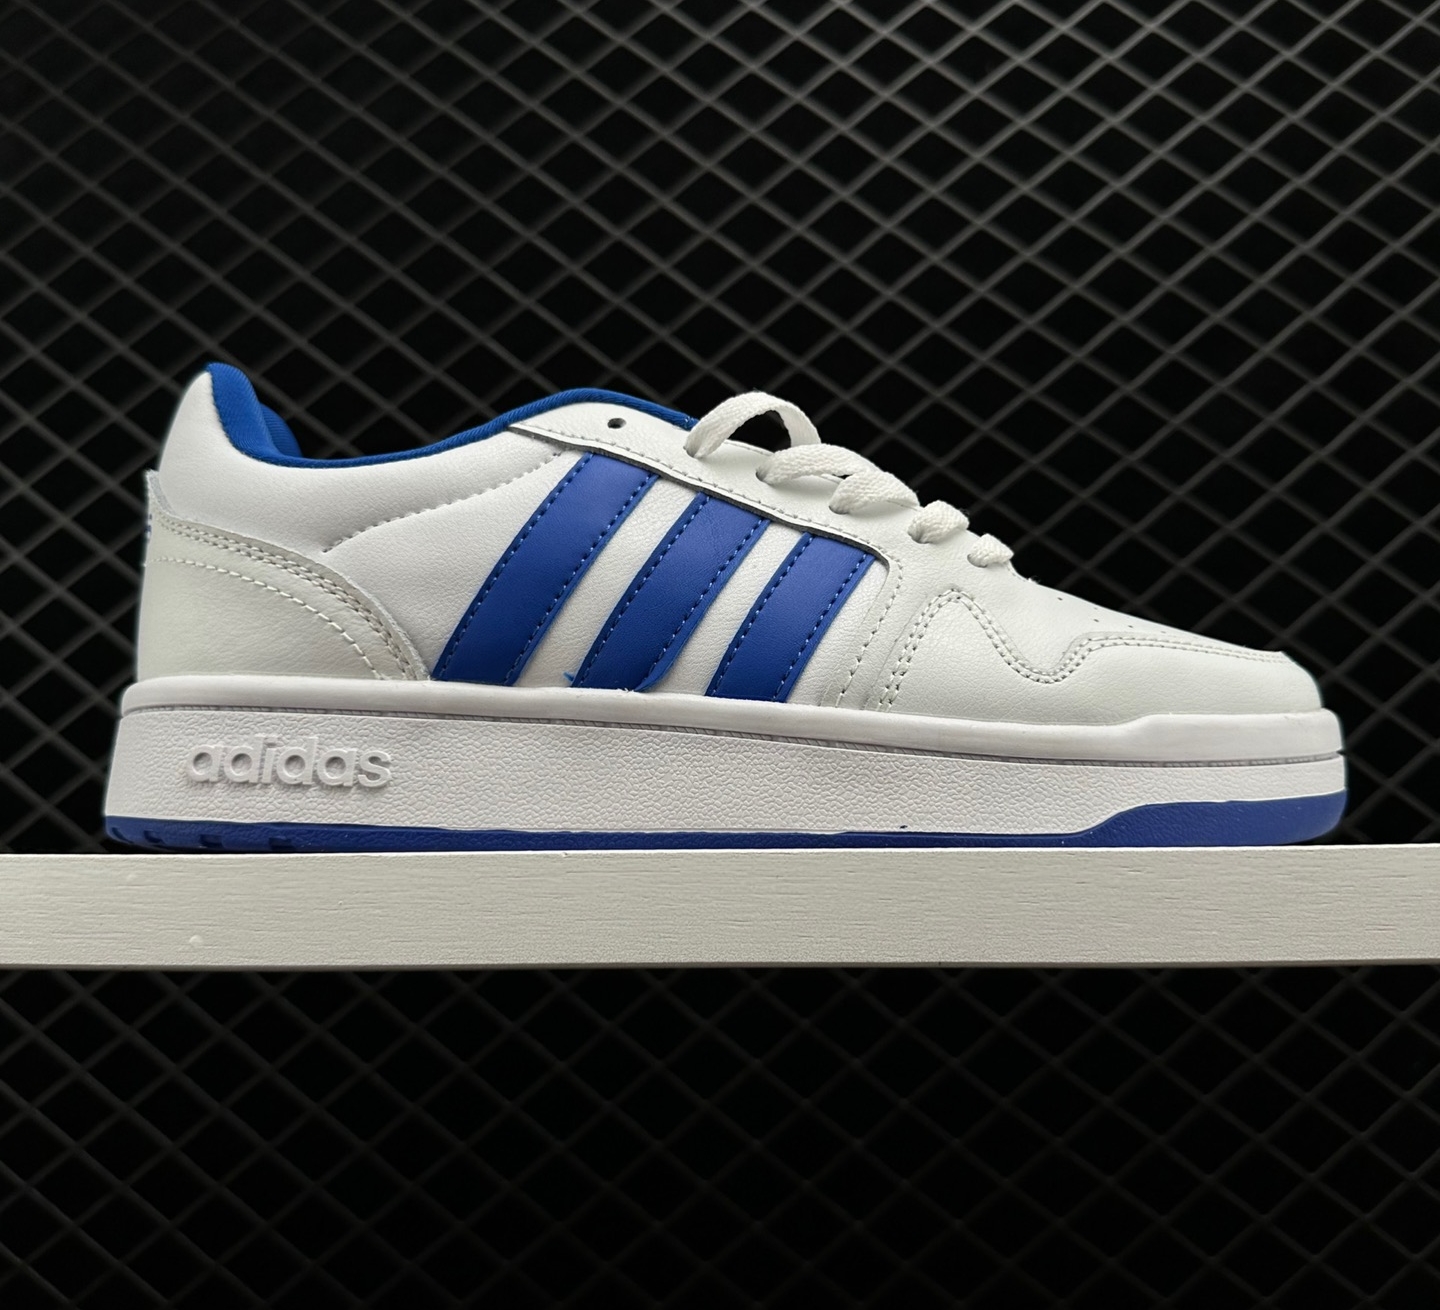 Adidas Neo Postmove 'White Blue' H00461 - Stylish and Versatile Sneakers